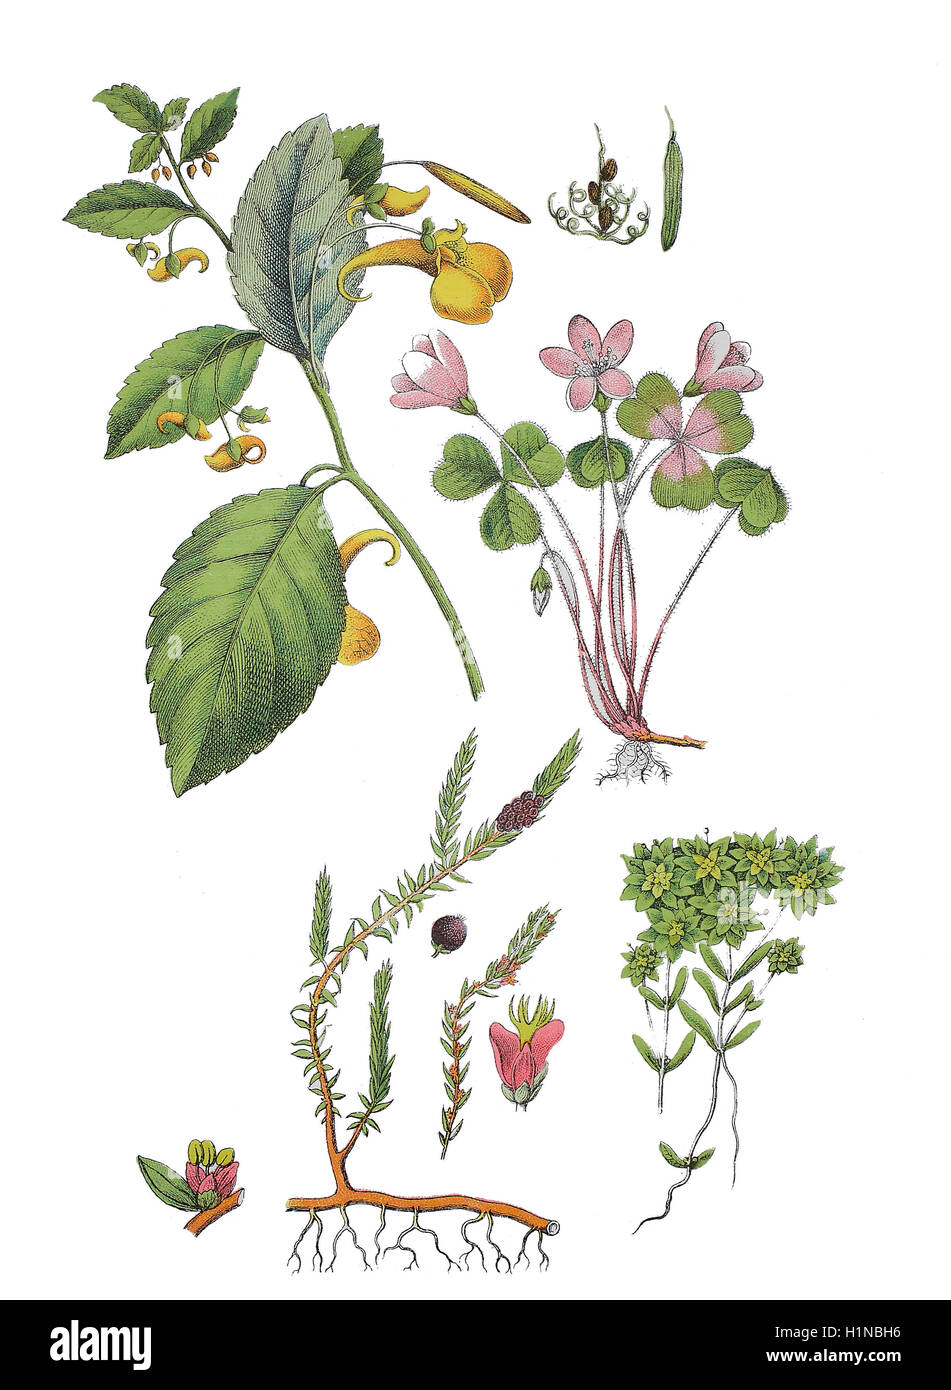 touch-me-not balsam, Impatiens noli-tangere (top left), wood sorrel, Oxalis acetosella (top right), black crowberry, Empetrum nigrum (bottem left), blunt-fruited water starwort, Callitriche palustris (bottem right), Stock Photo